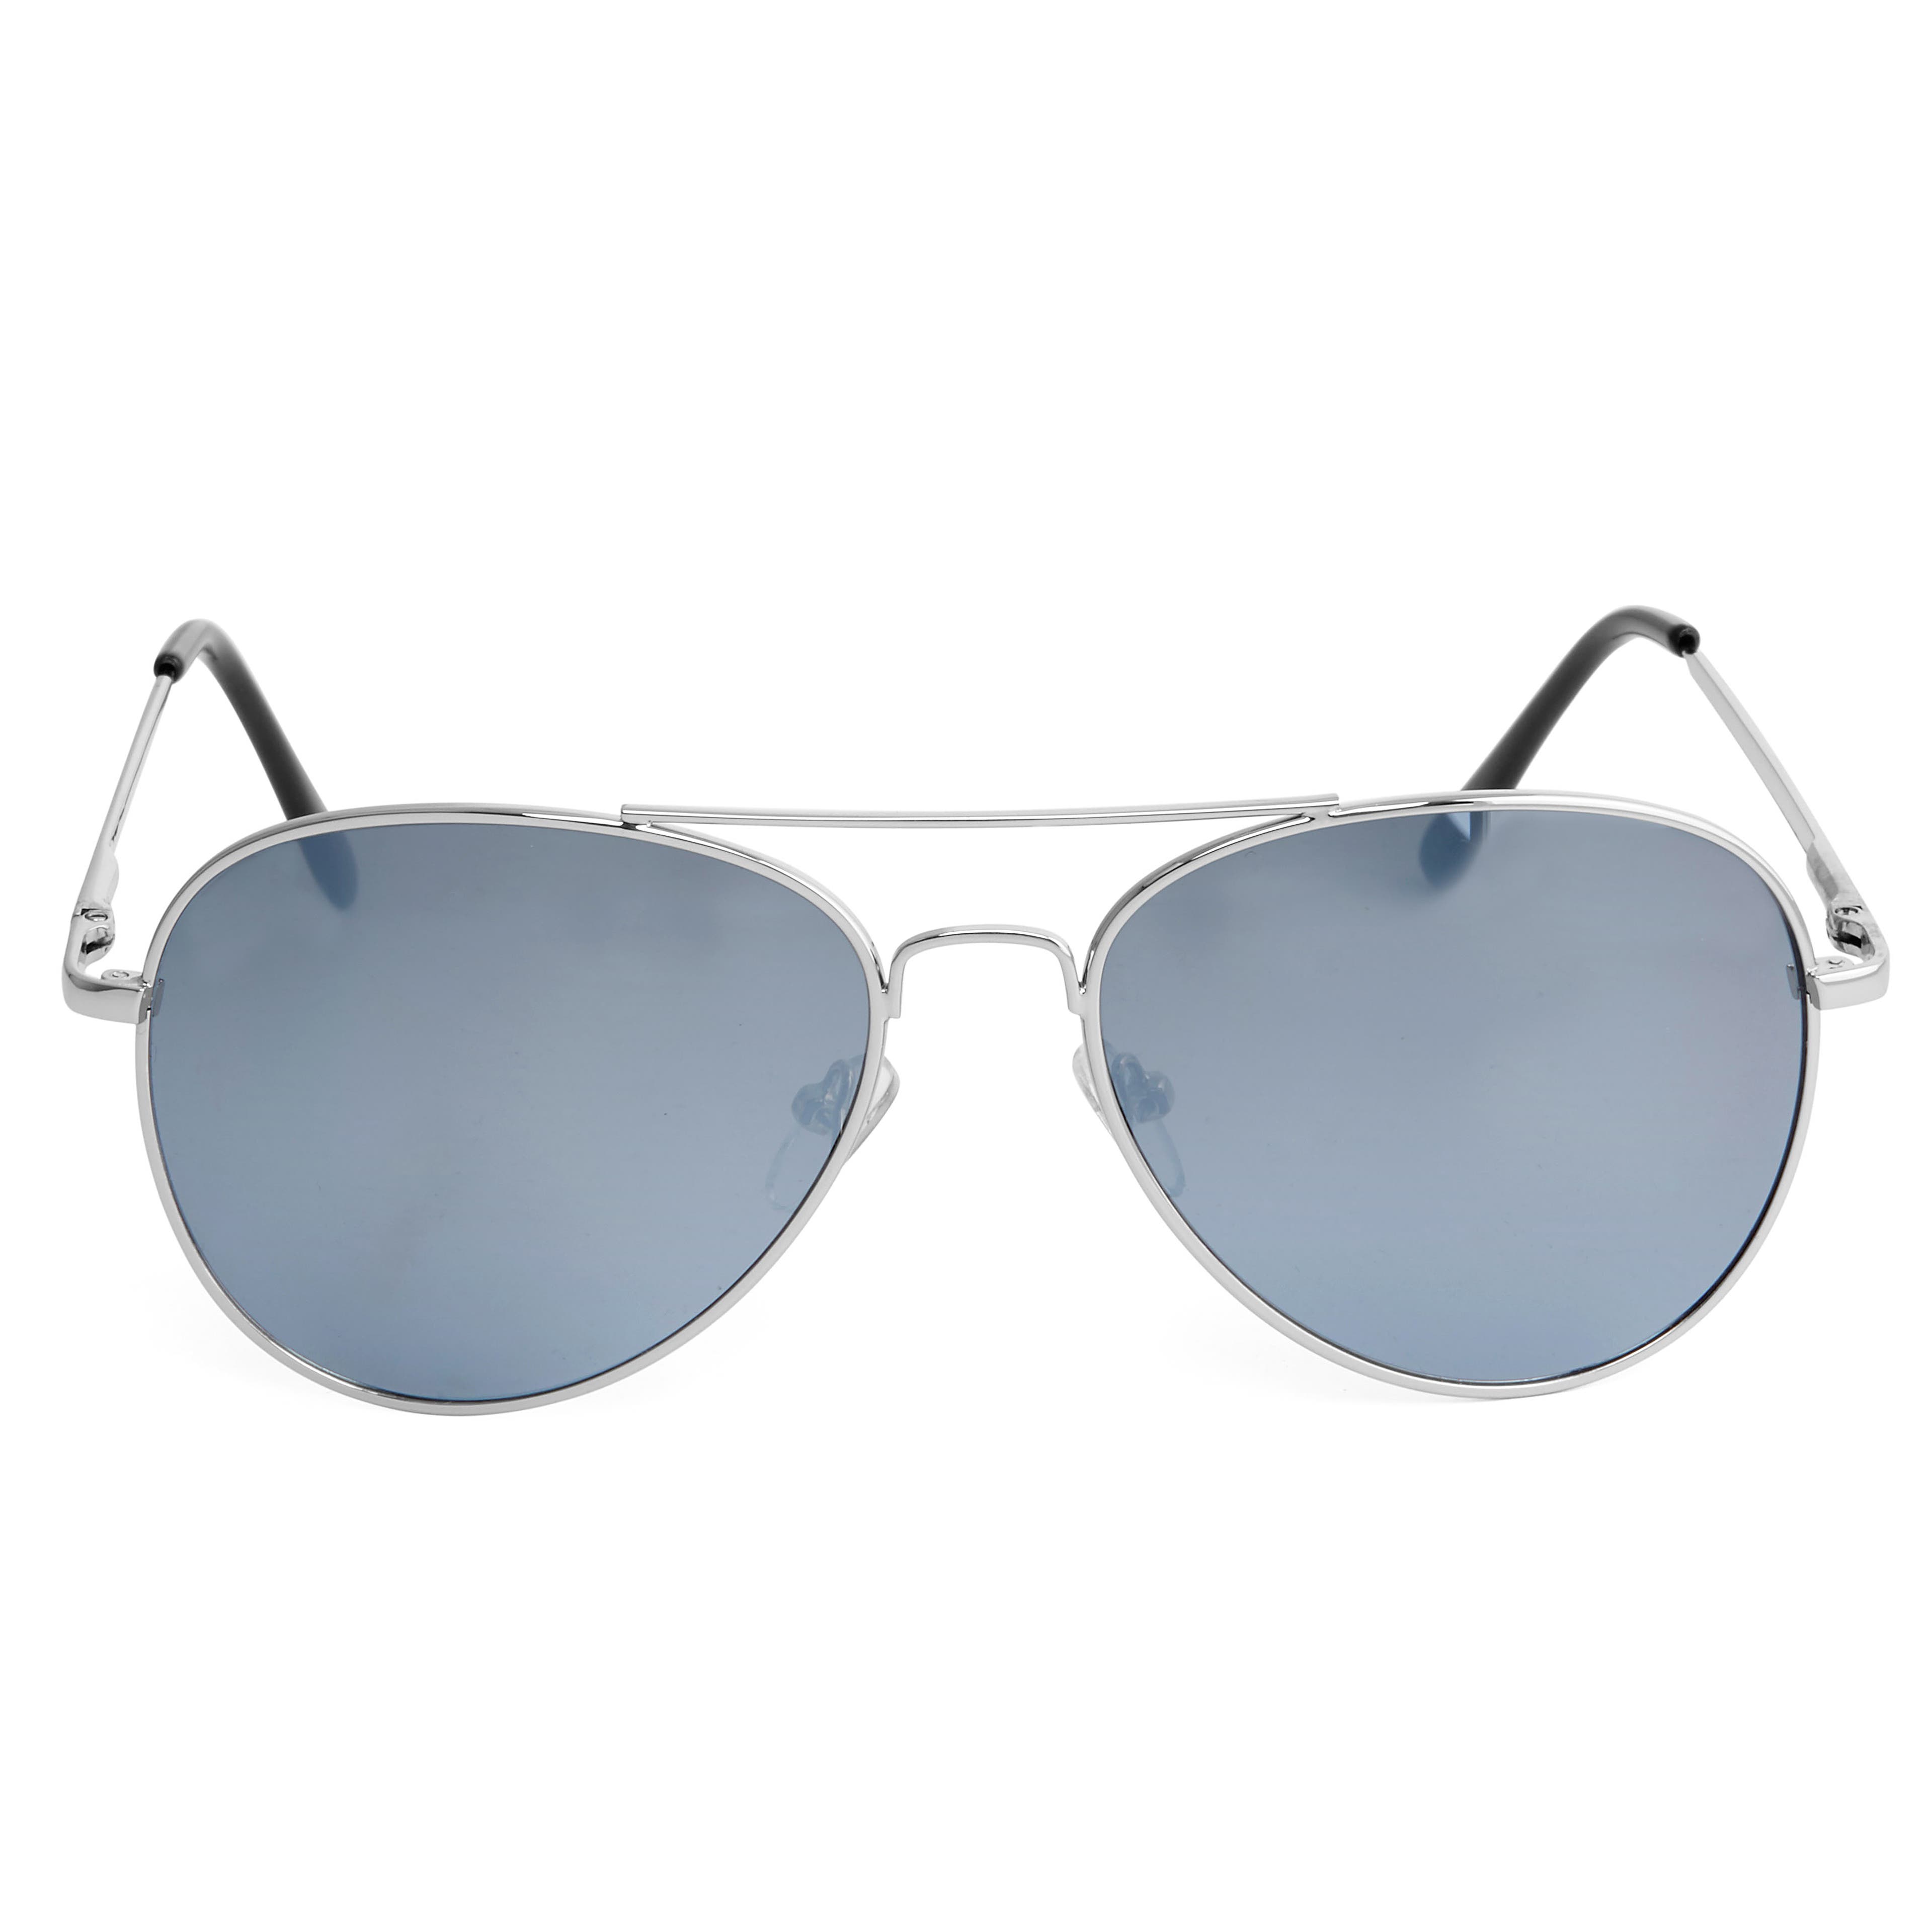 Огледални авиаторски слънчеви очила със сребриста рамка